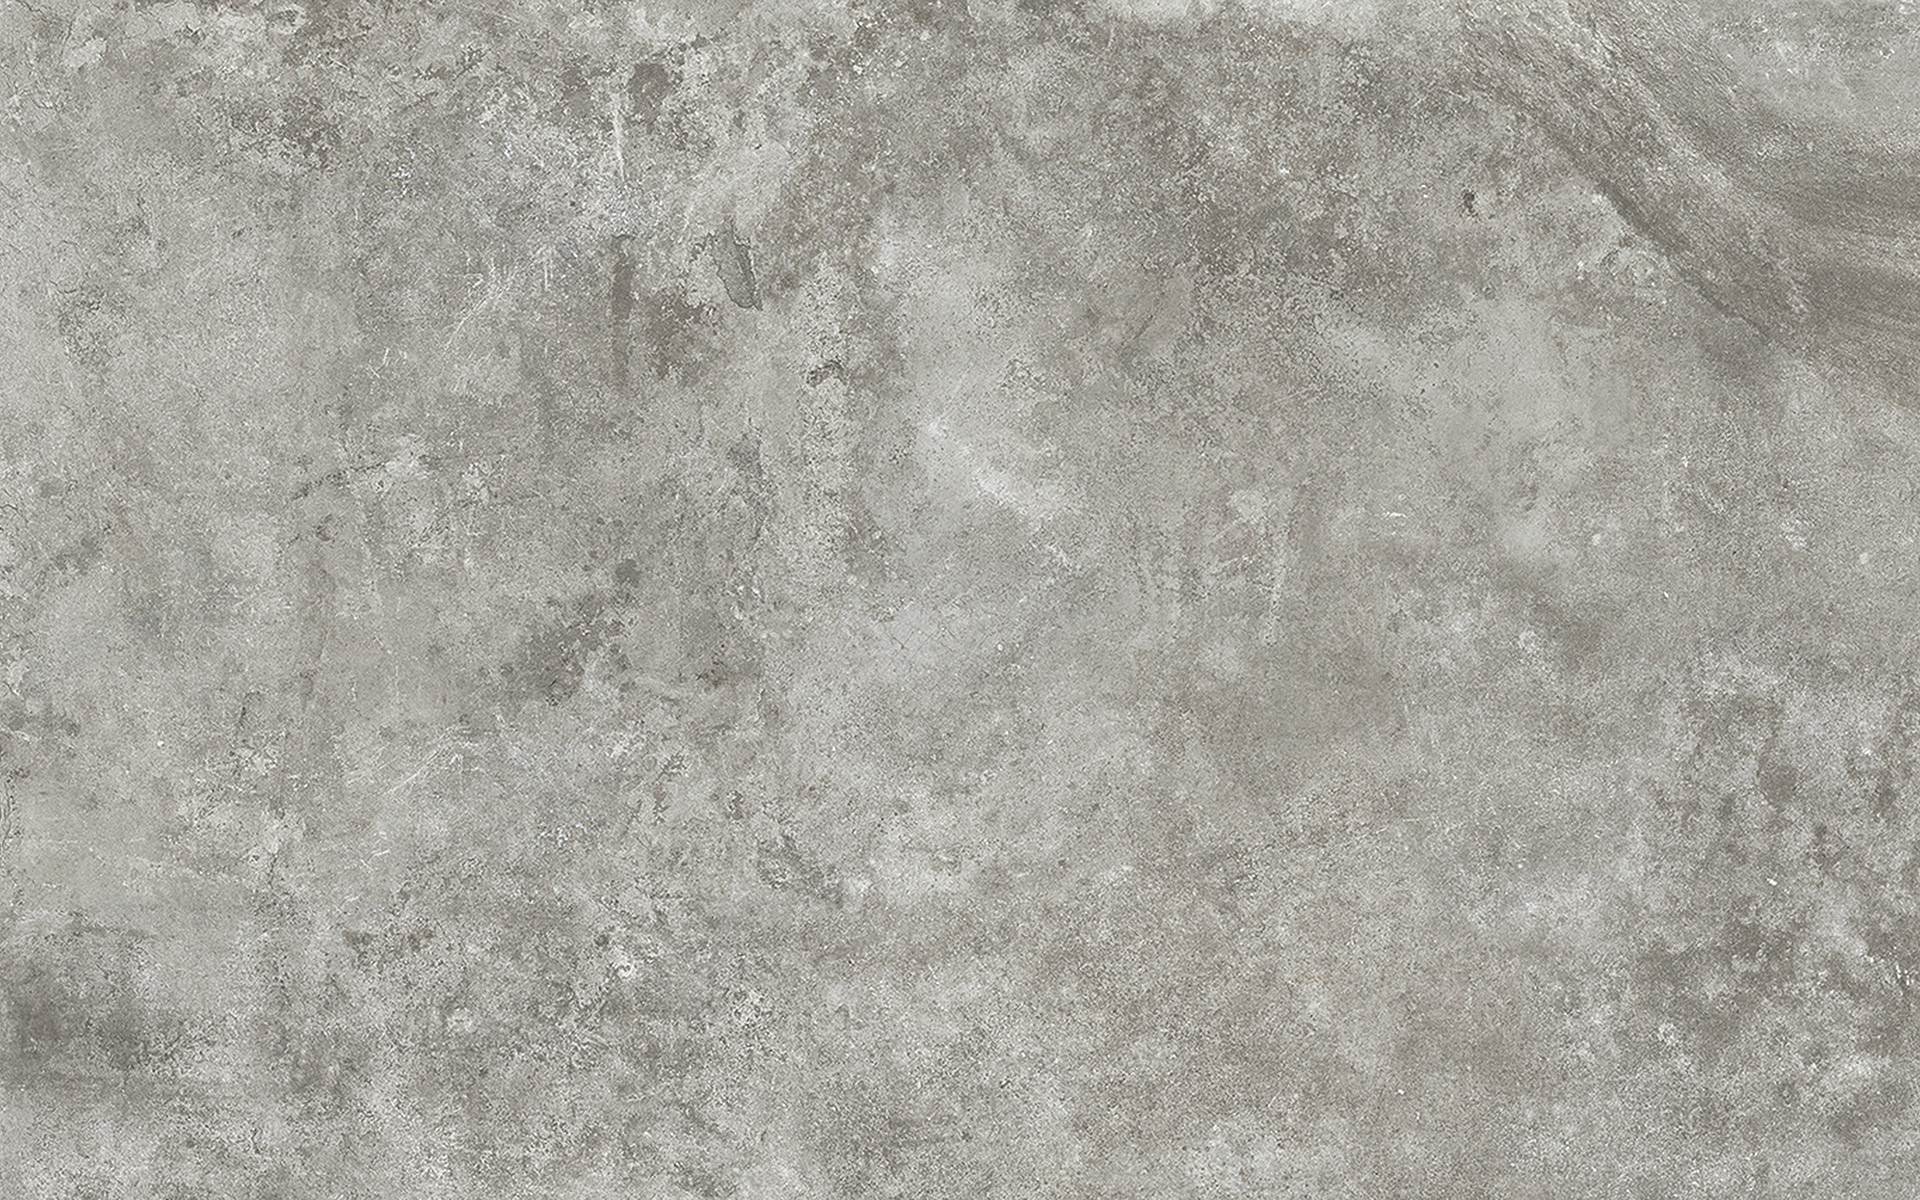 REROCK GREY SMOOTH Medium Grey Marble tile   120 x 280 cm